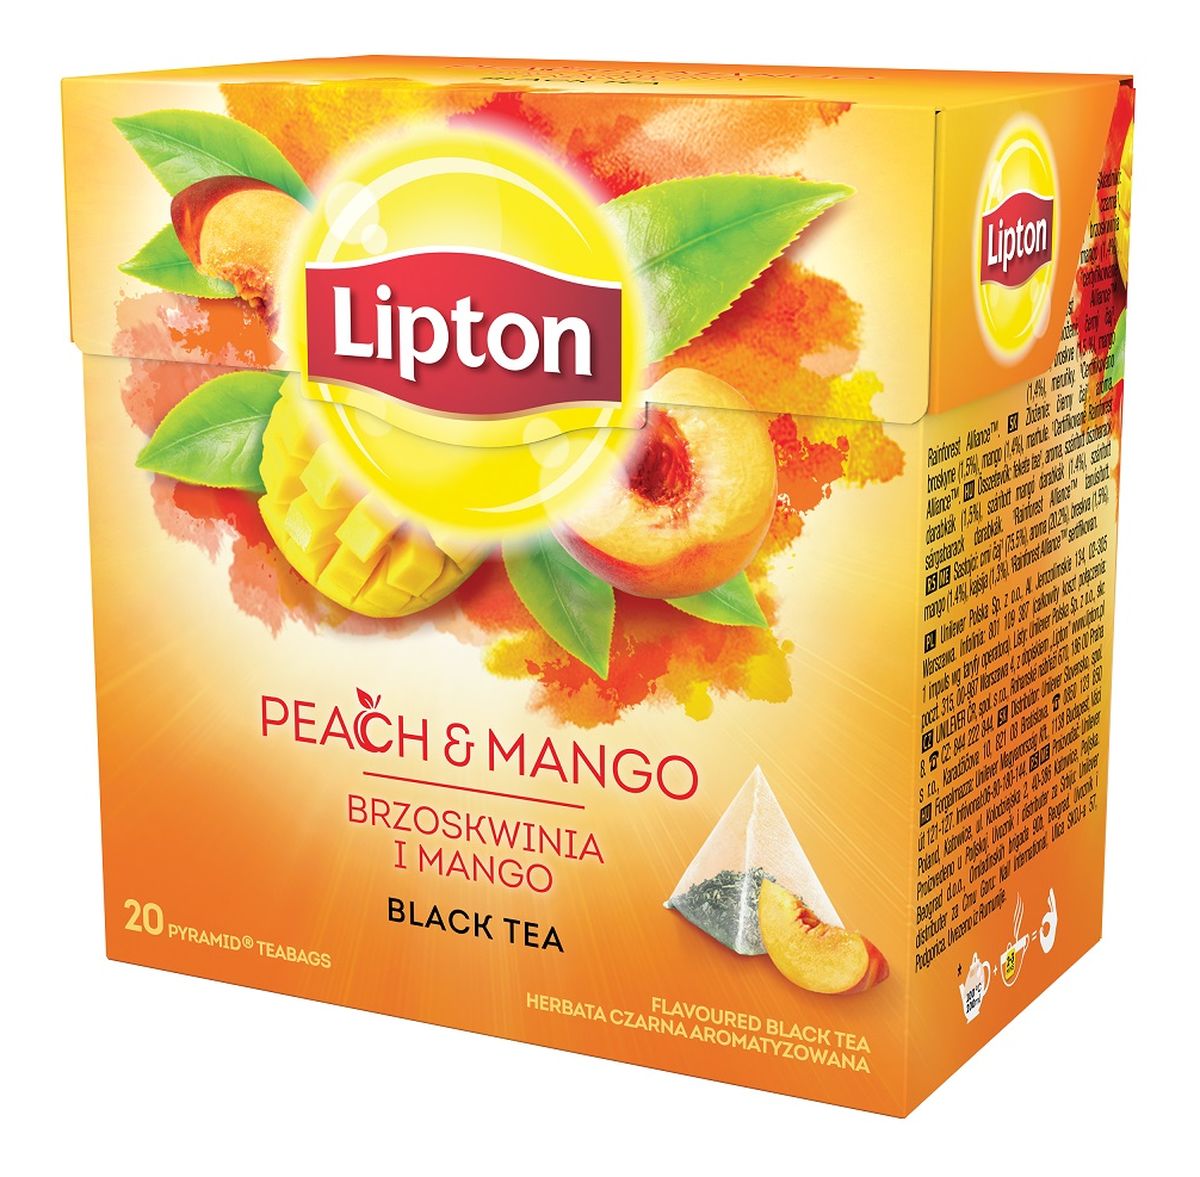 herbata czarna aromatyzowana Brzoskwinia & Mango 20 piramidek